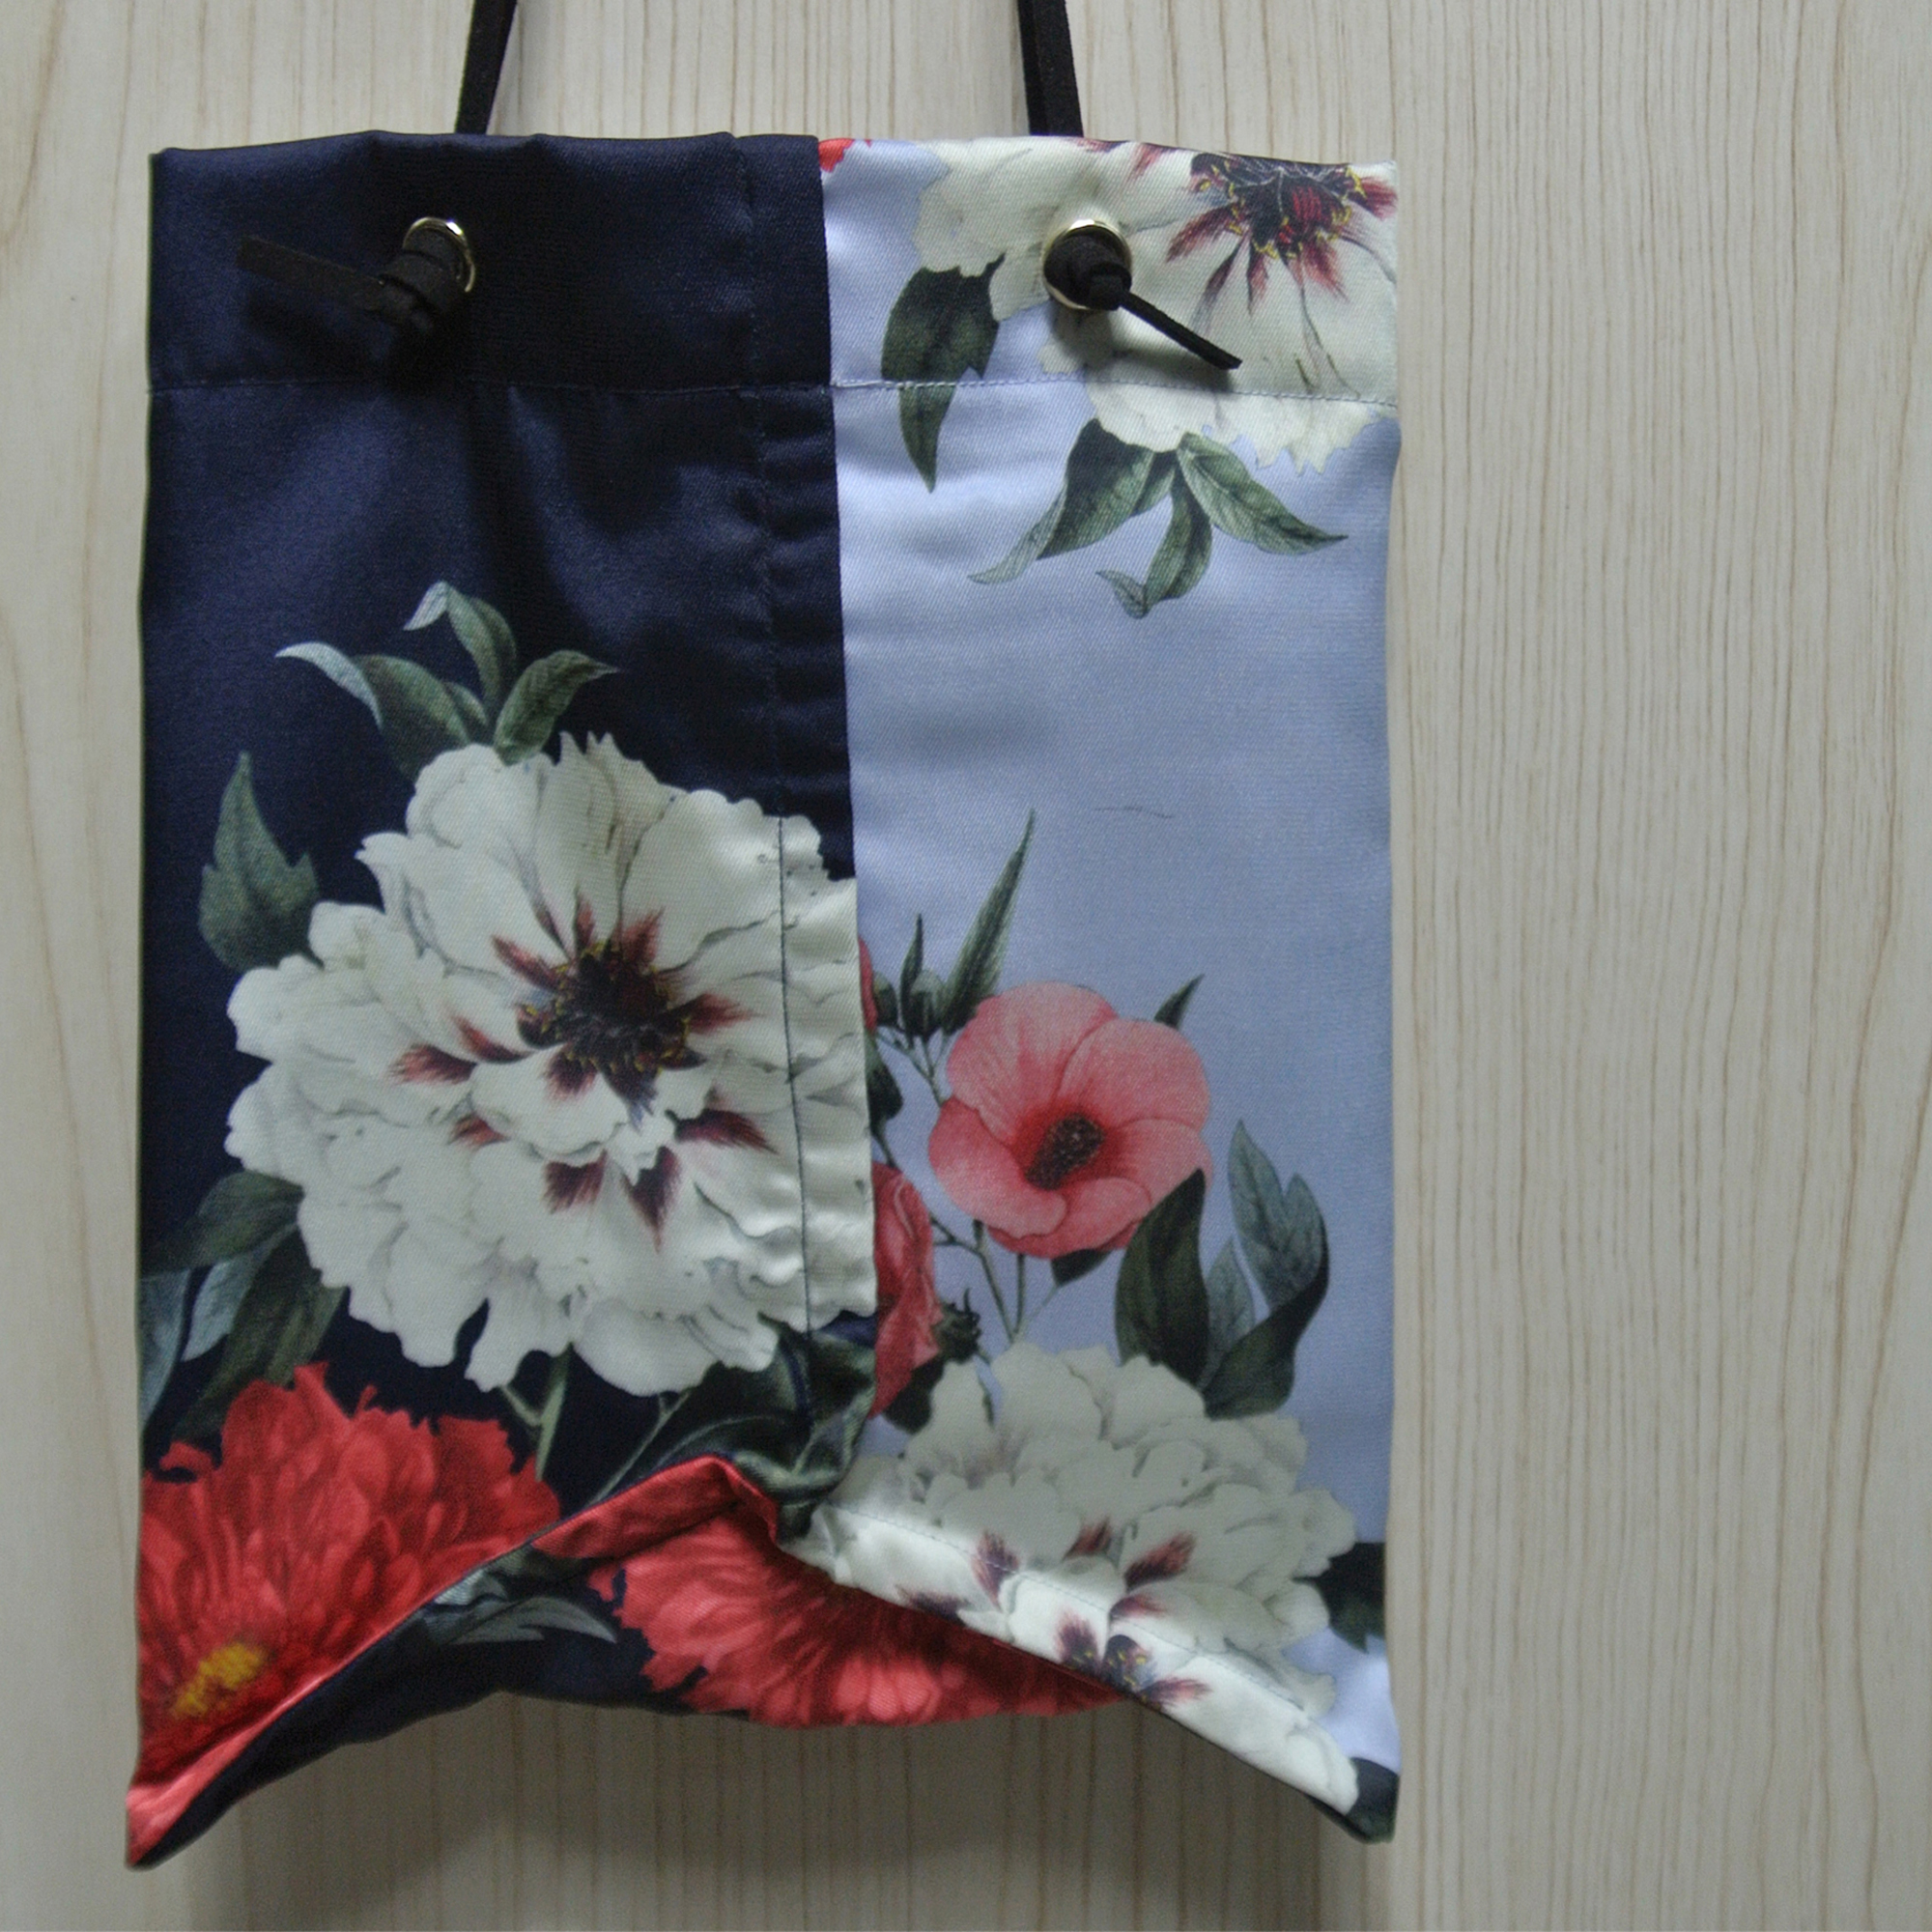 2020 Good Quality Small Moq Bags Fashion Designer Bags - Fashion bag lady bag with customized patterns based on small MOQ – Harmony